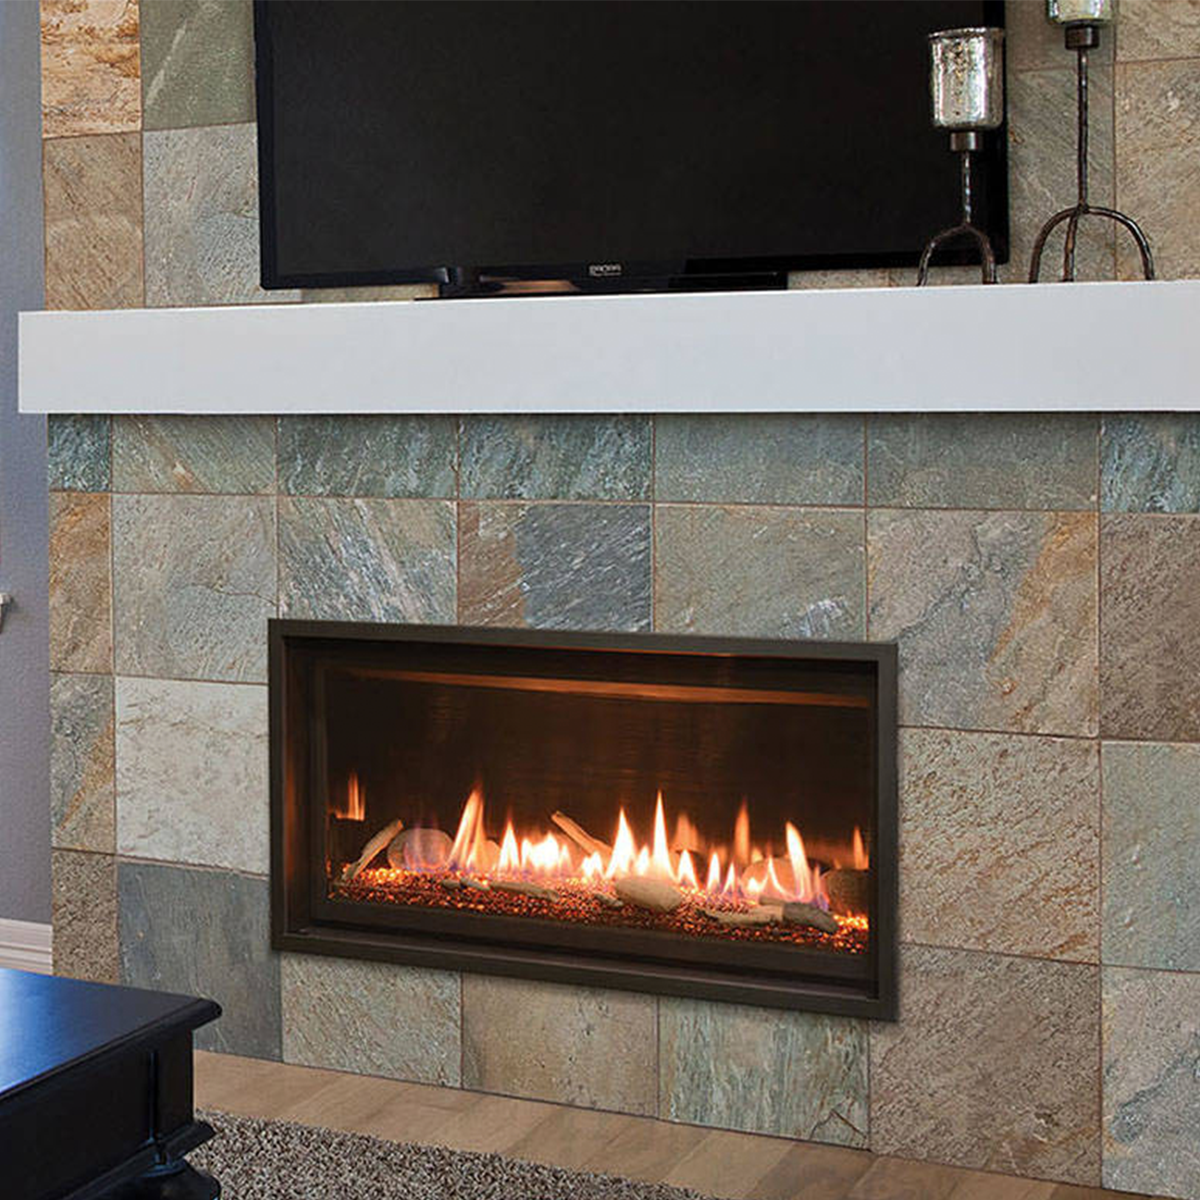 Kozy Heat Slayton 36 Gas Fireplace - Hearth Appliances